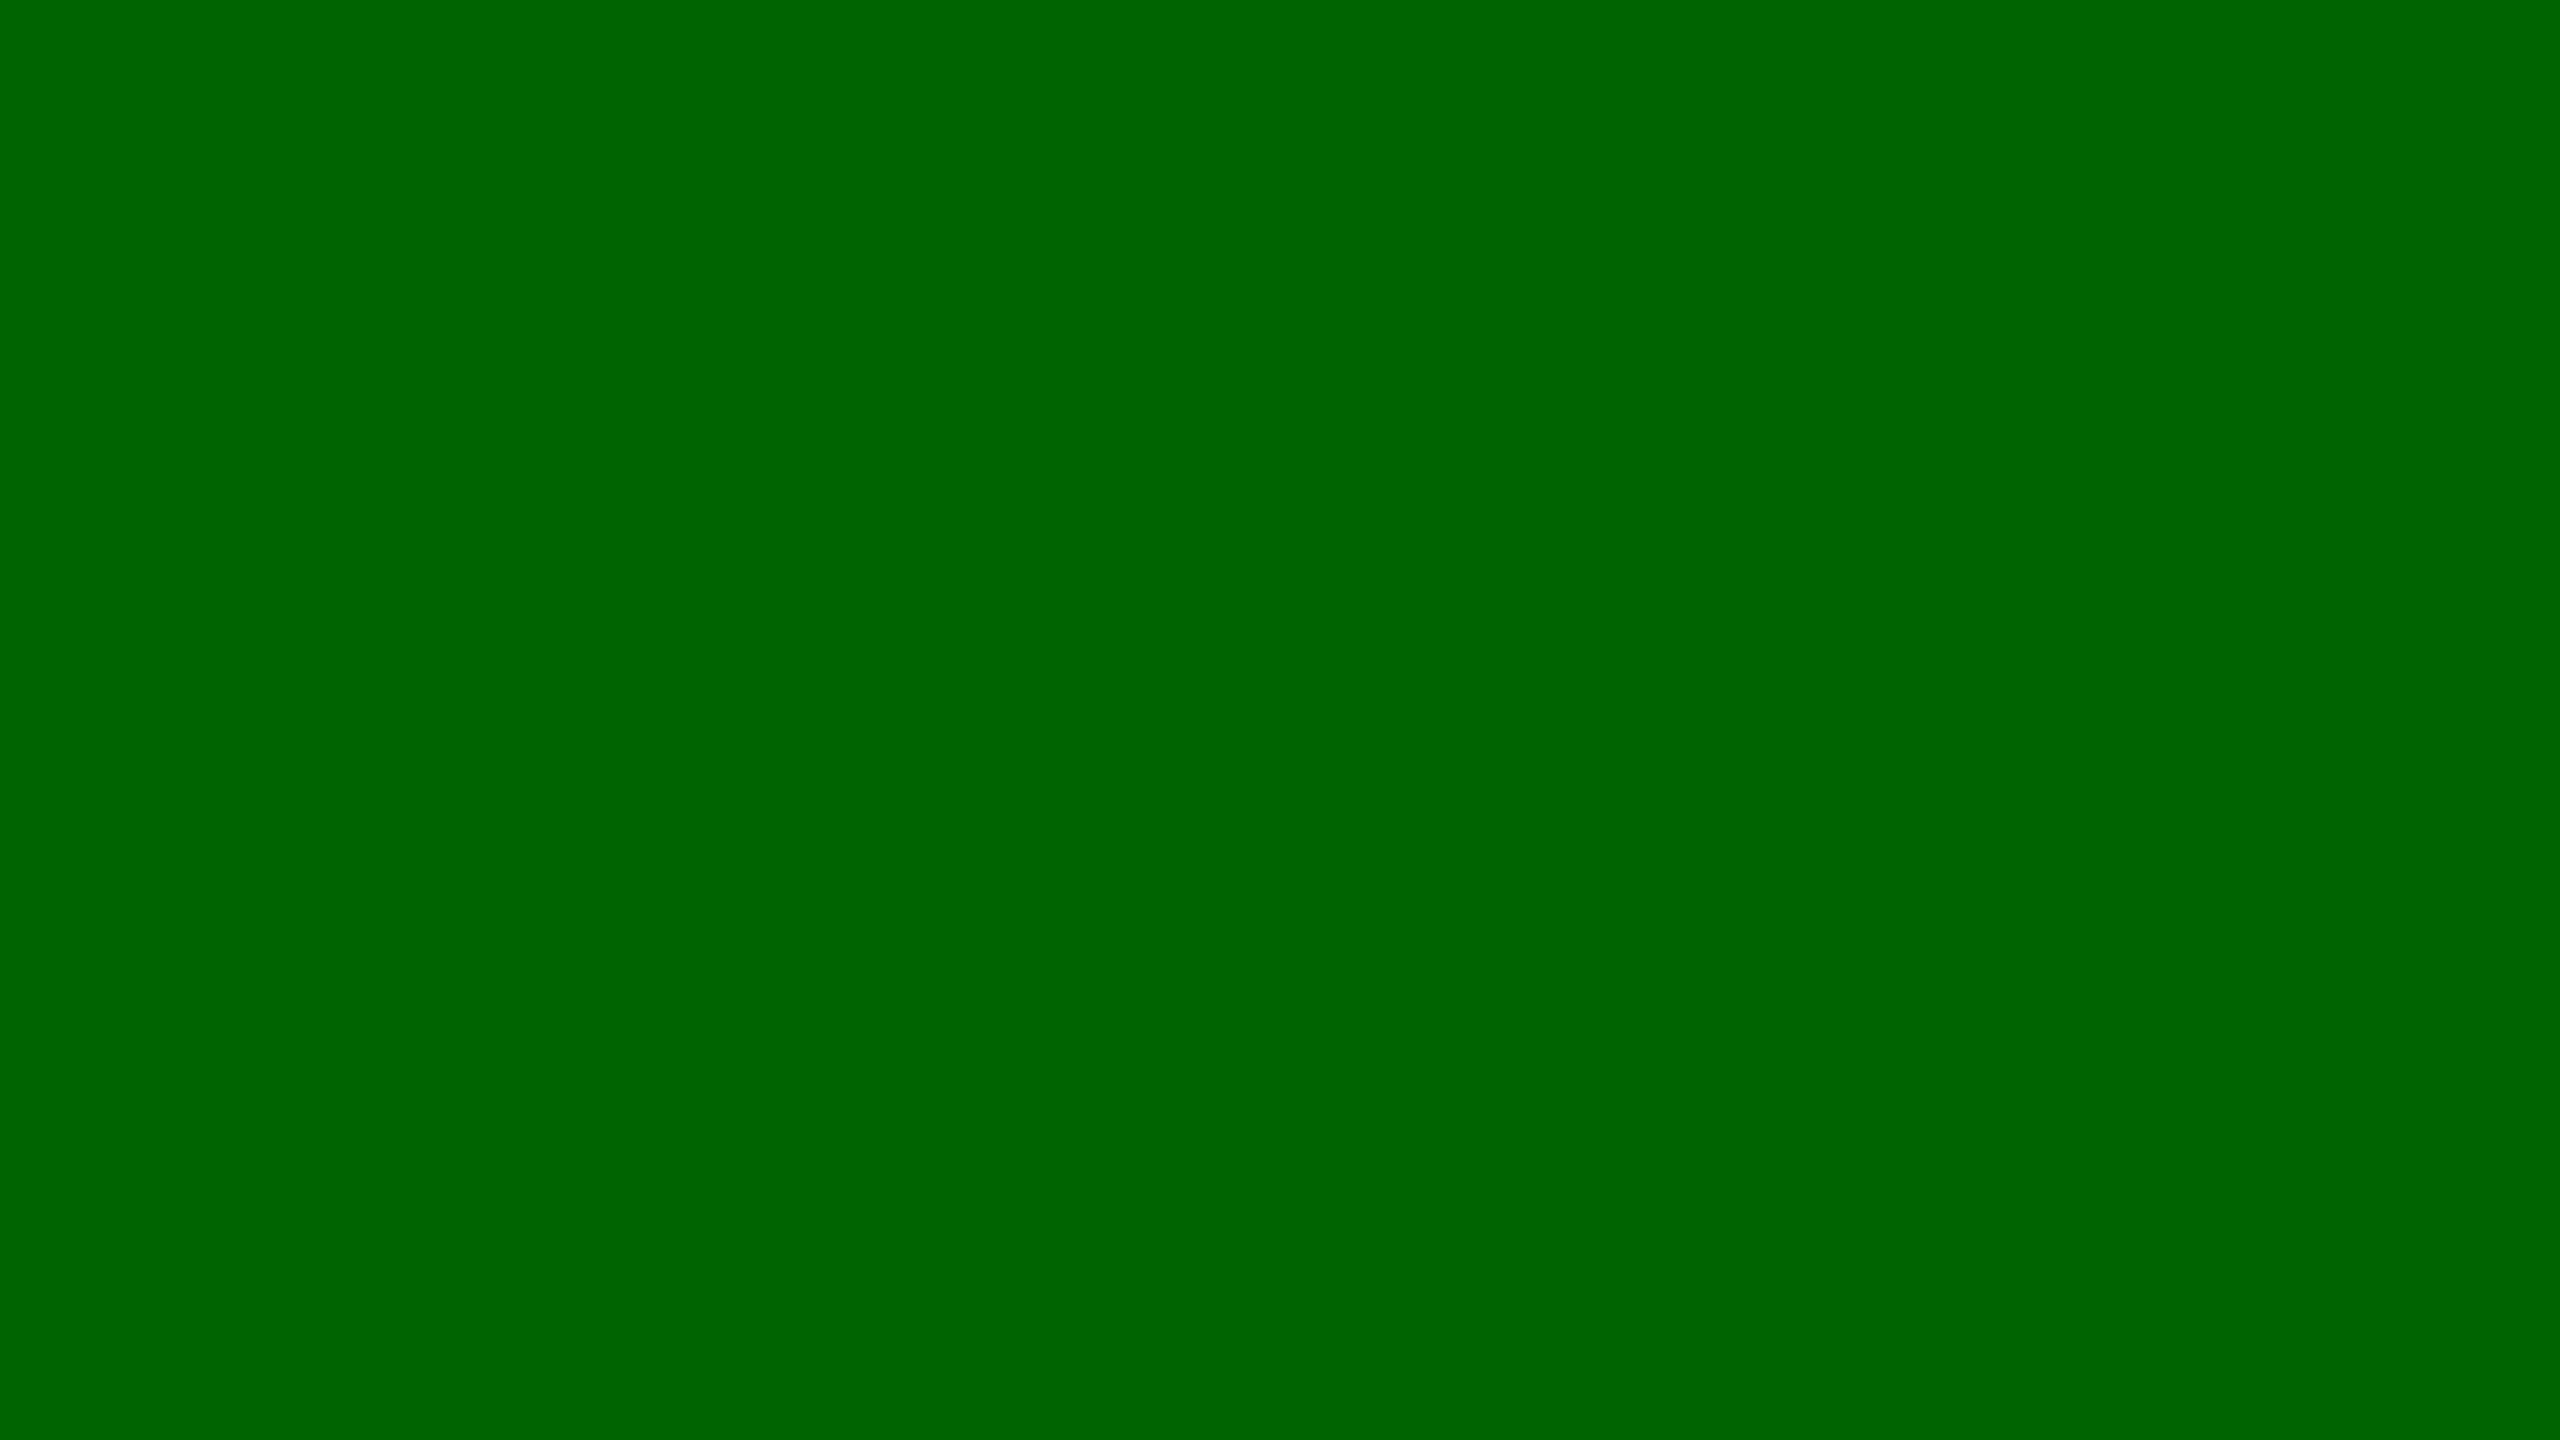 2560x1440 Dark Green Tumblr Backgrounds x3cbx3edark green backgroundx3cbx3e 9gPTx3zf